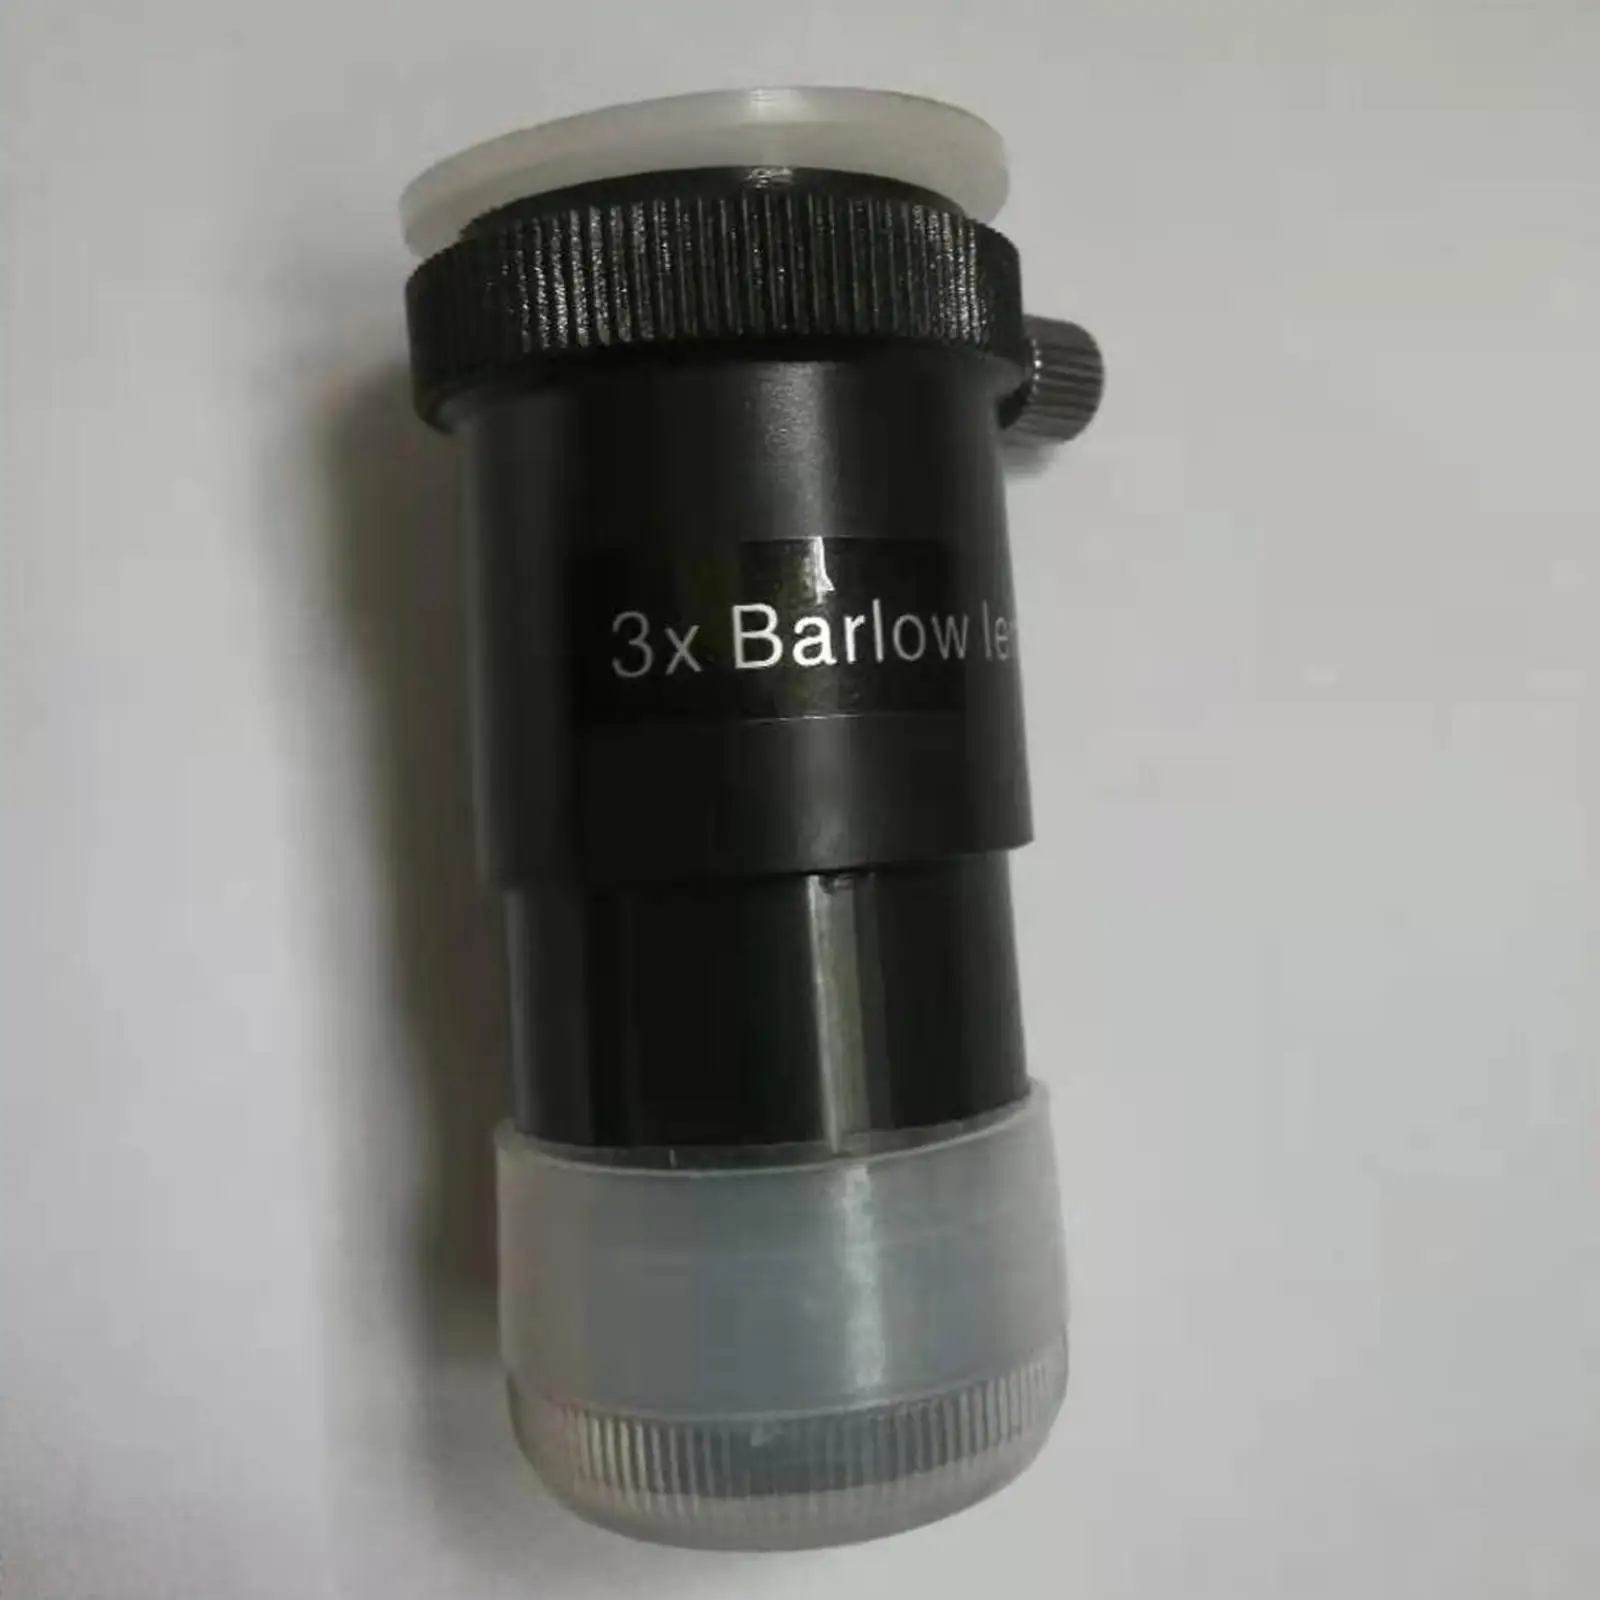 3X Barlow Lens for Celestron 1.25`` Astronomy Telescope Eyepiece M42